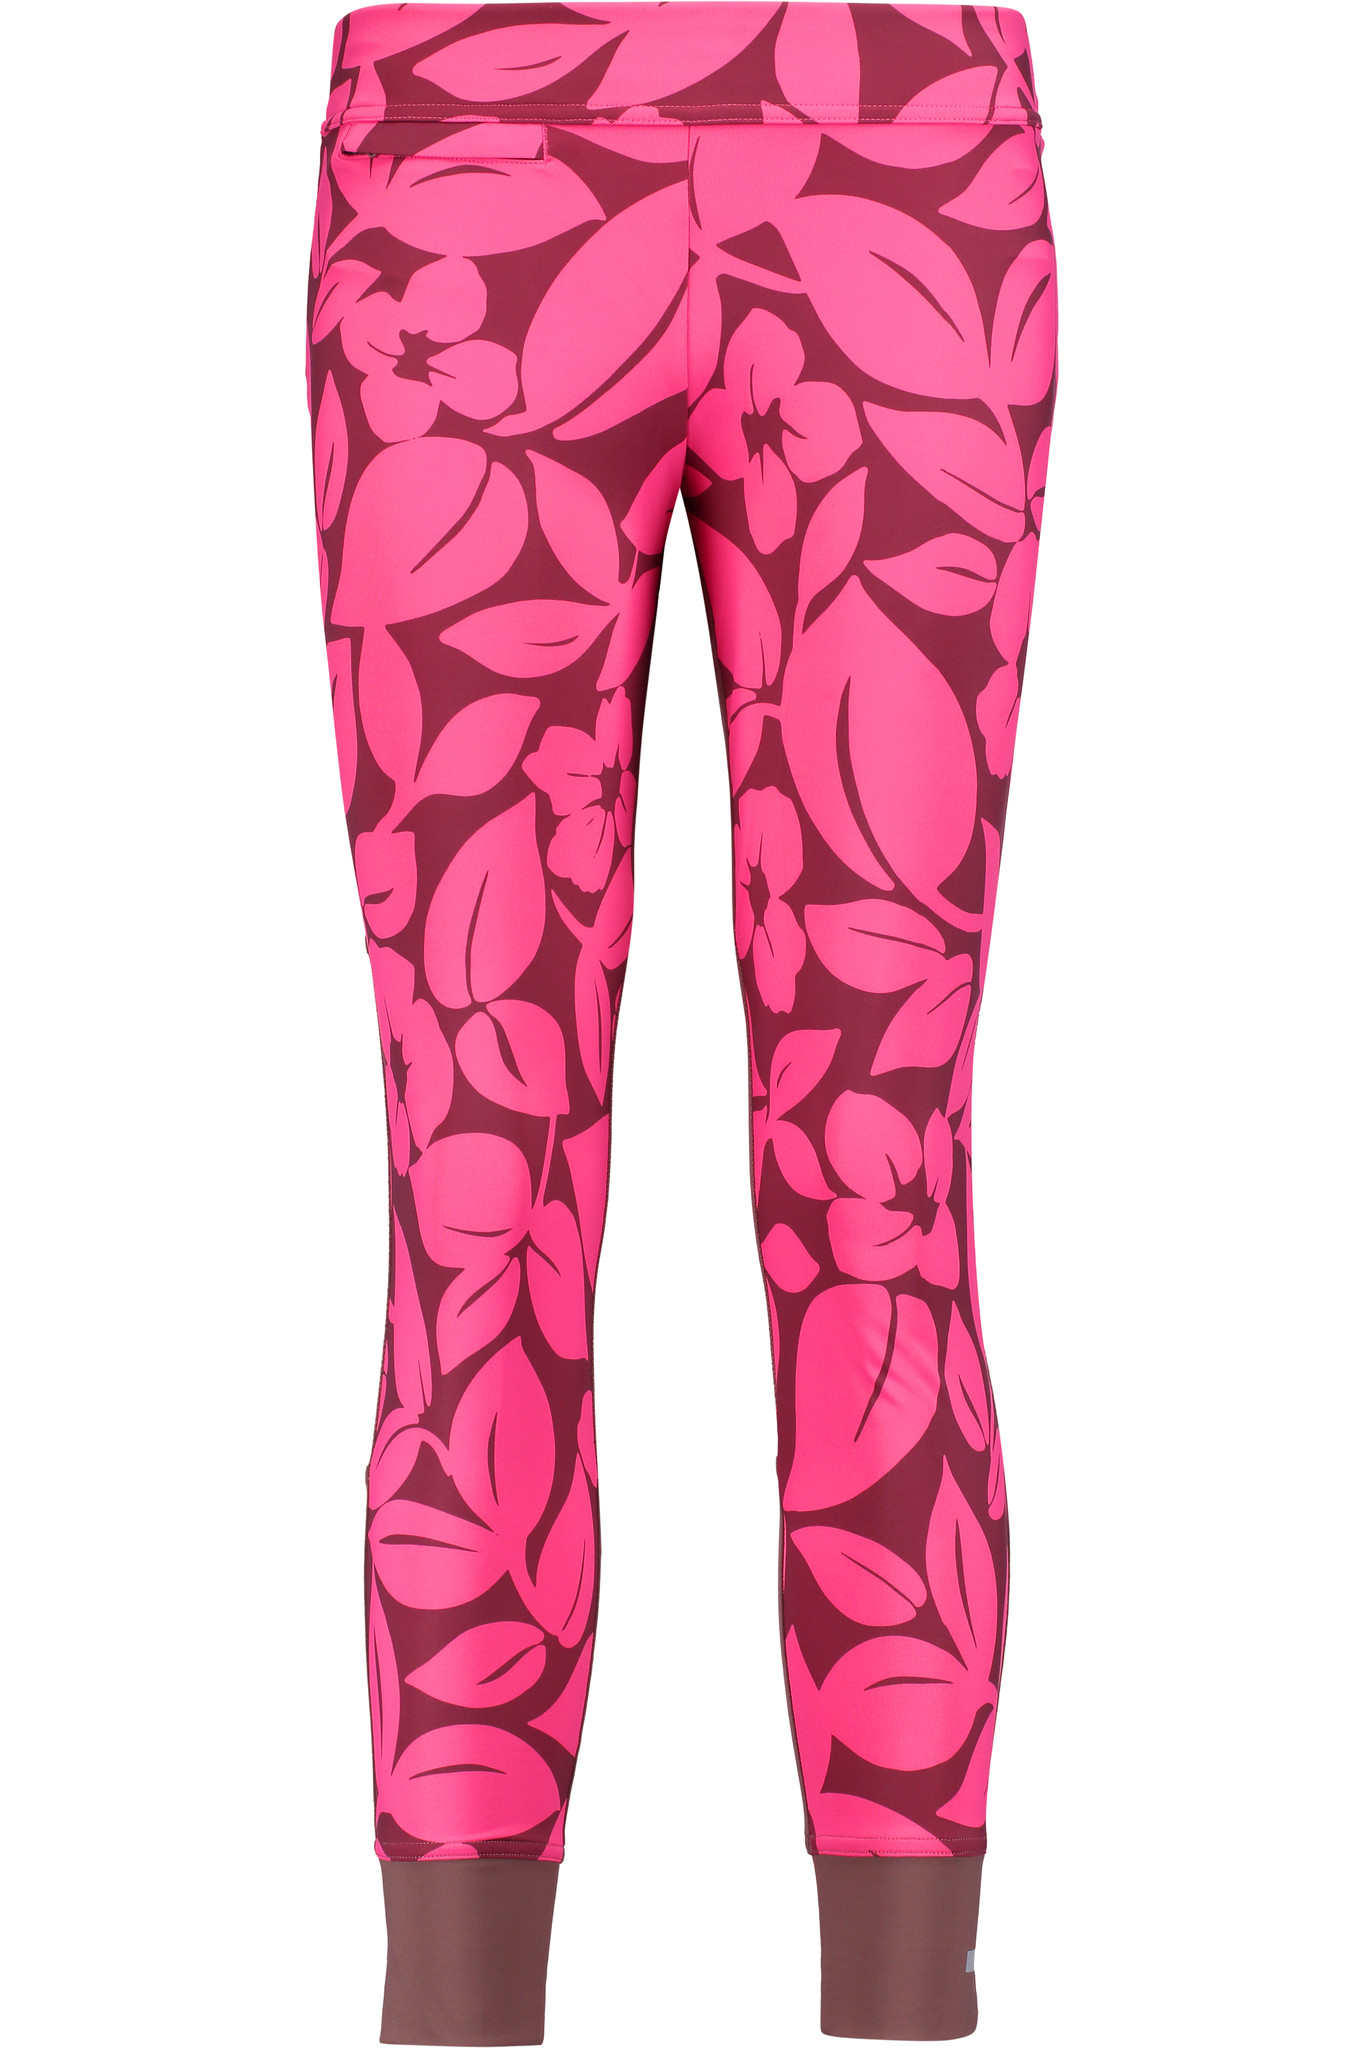 Stella Mccartney Adidas Pink Leggings The Art Of Mike Mignola